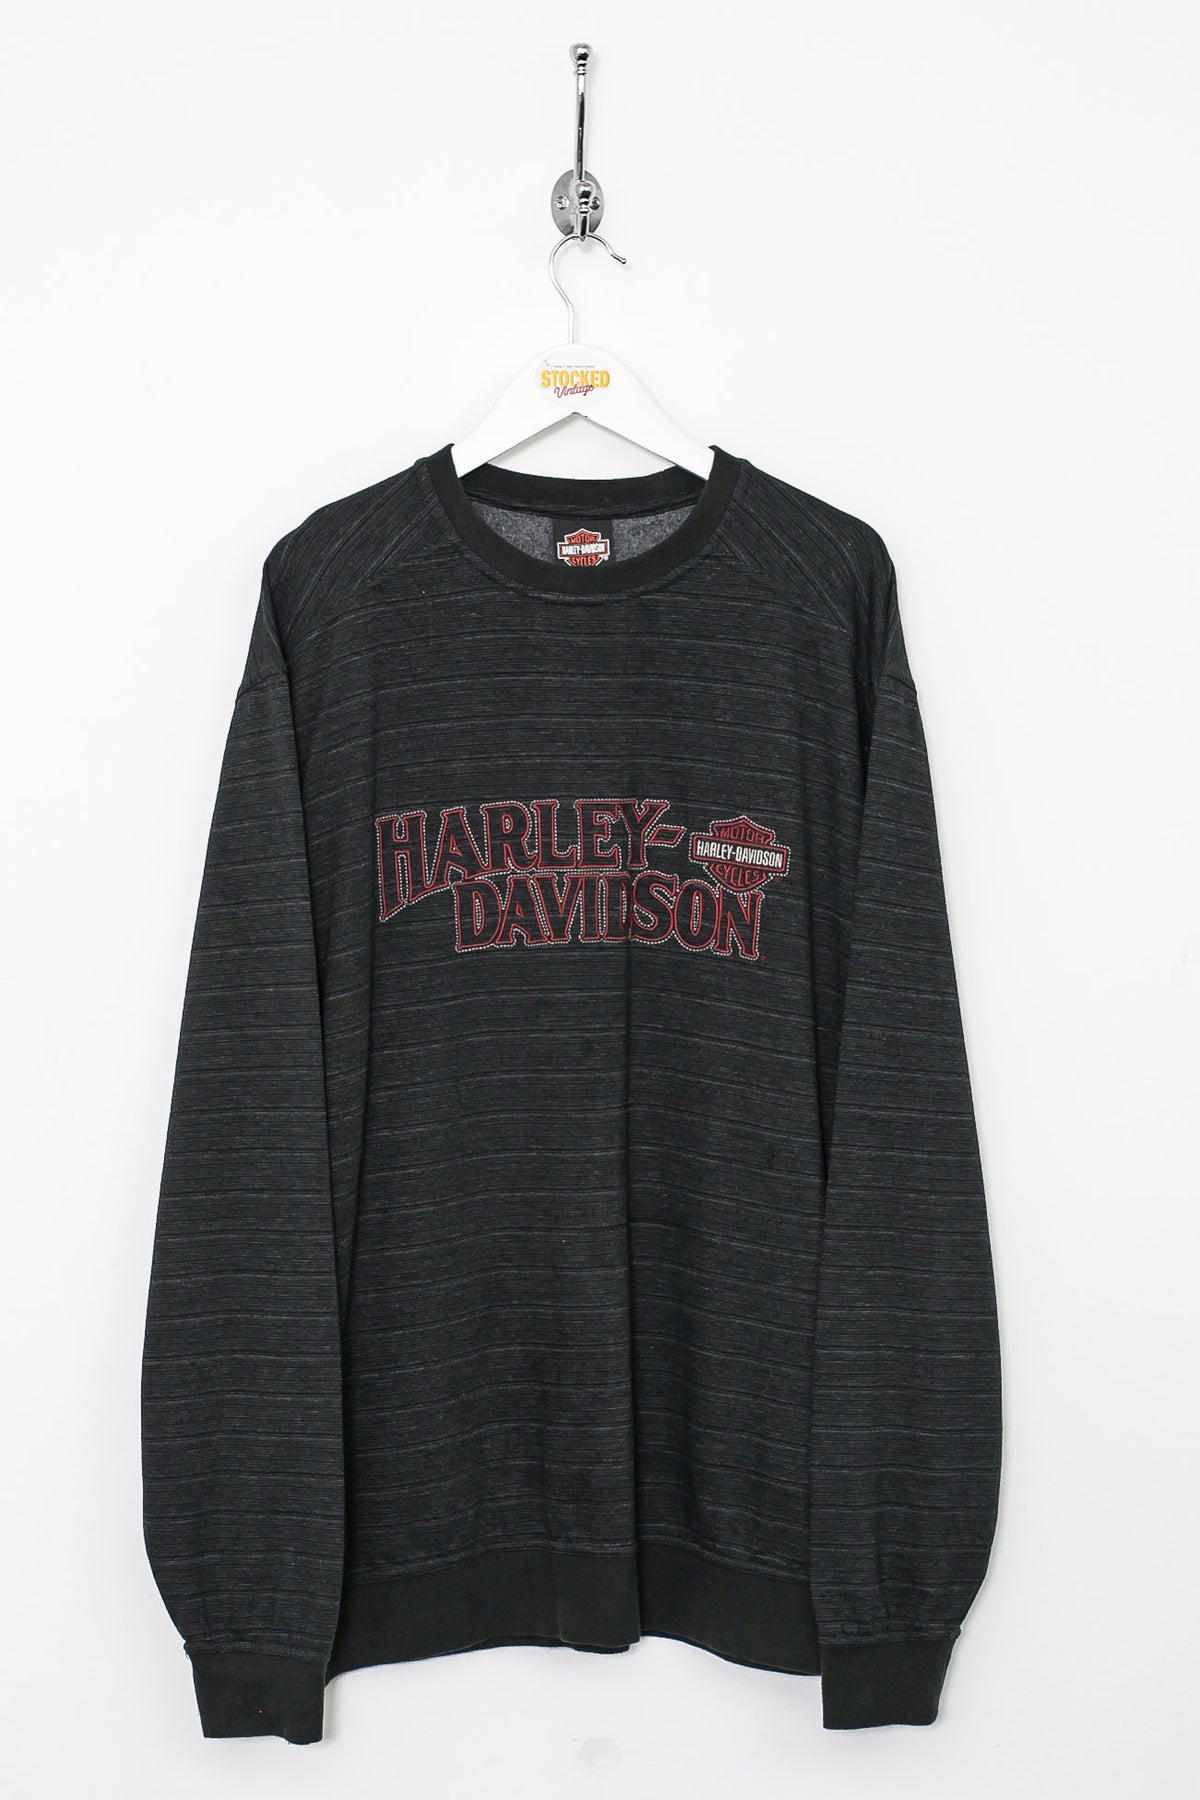 00s Harley Davidson Sweatshirt (L)